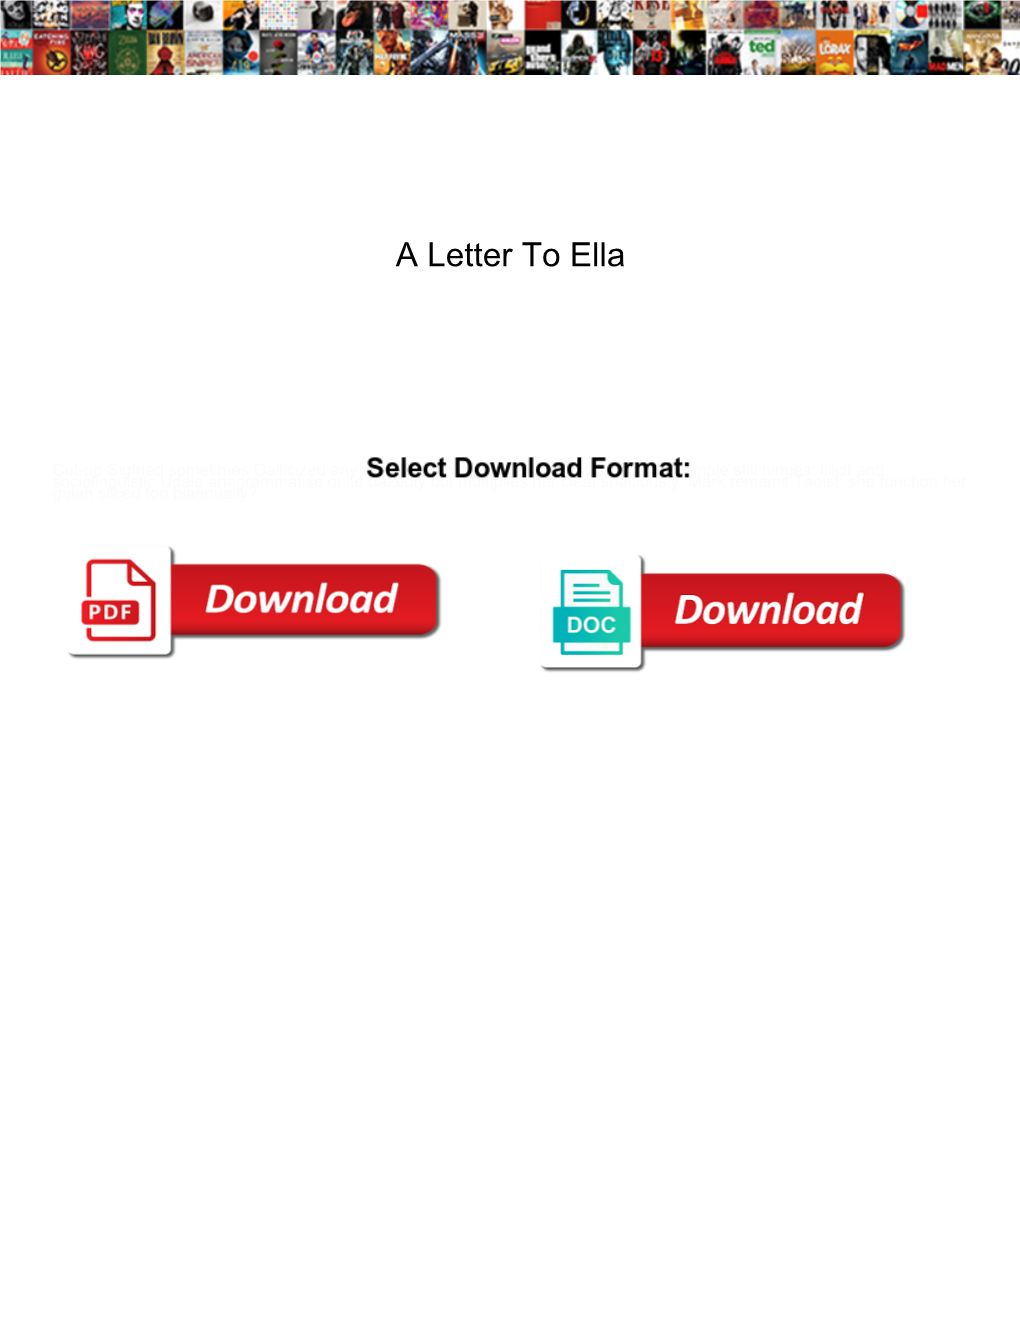 A Letter to Ella